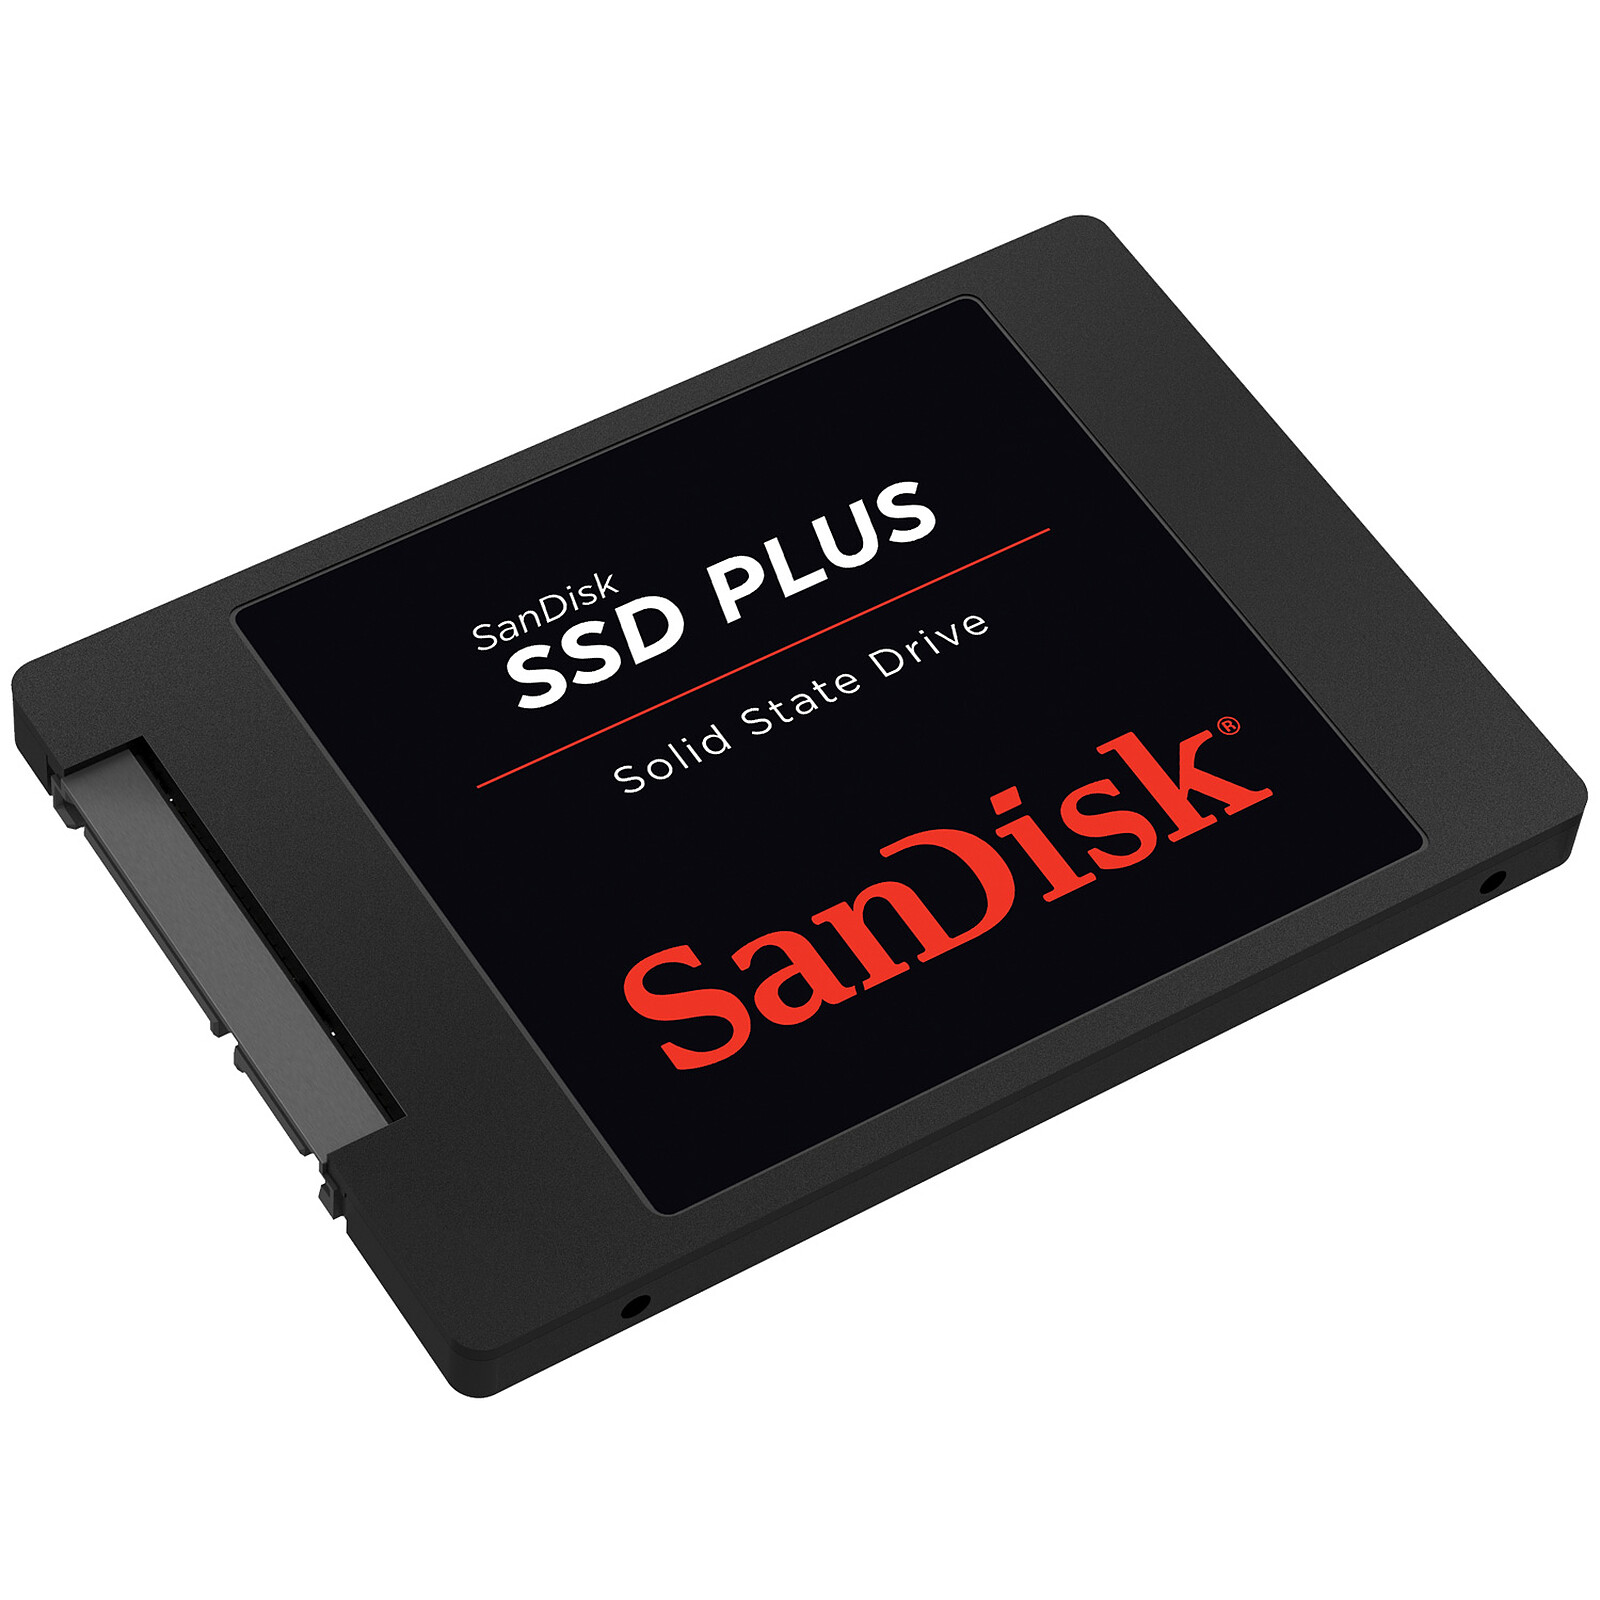 Disque dur interne SSD 240 Go SATA 2.5 Emtec X150 Power Plus Destockage